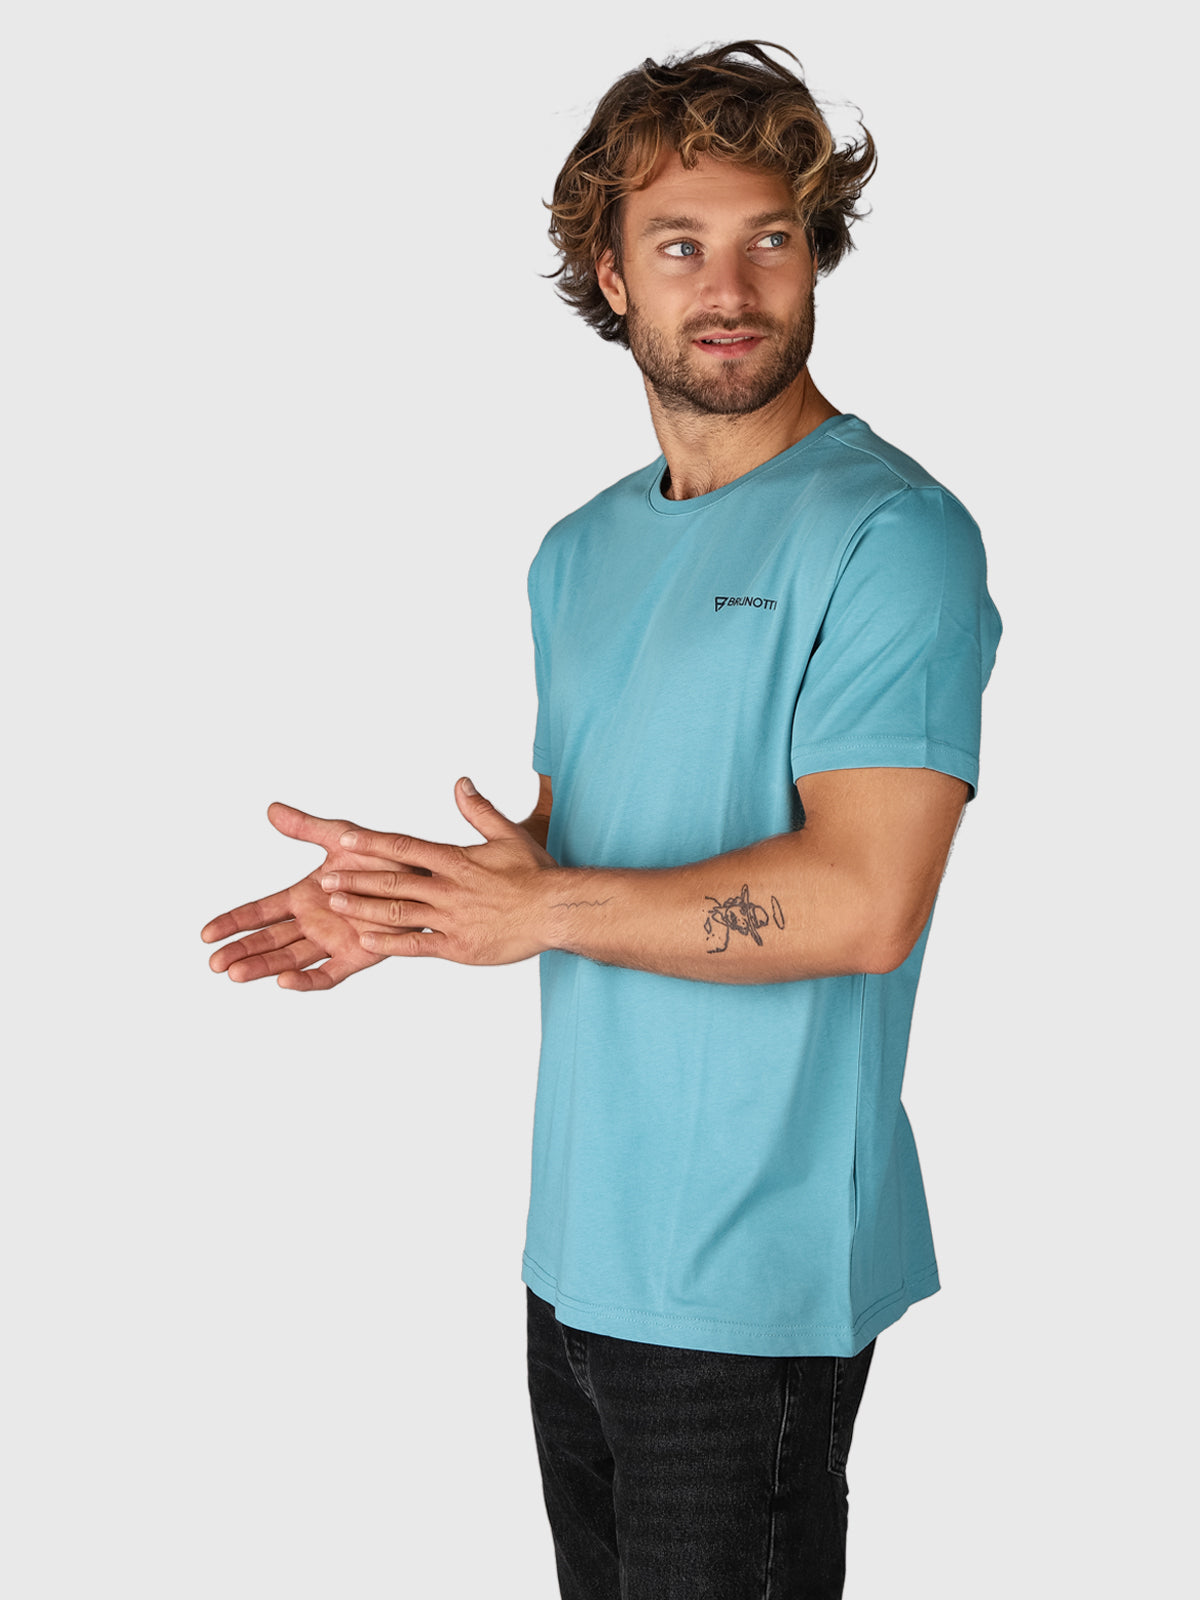 Milon-Back-R Herren T-shirt |  Blau